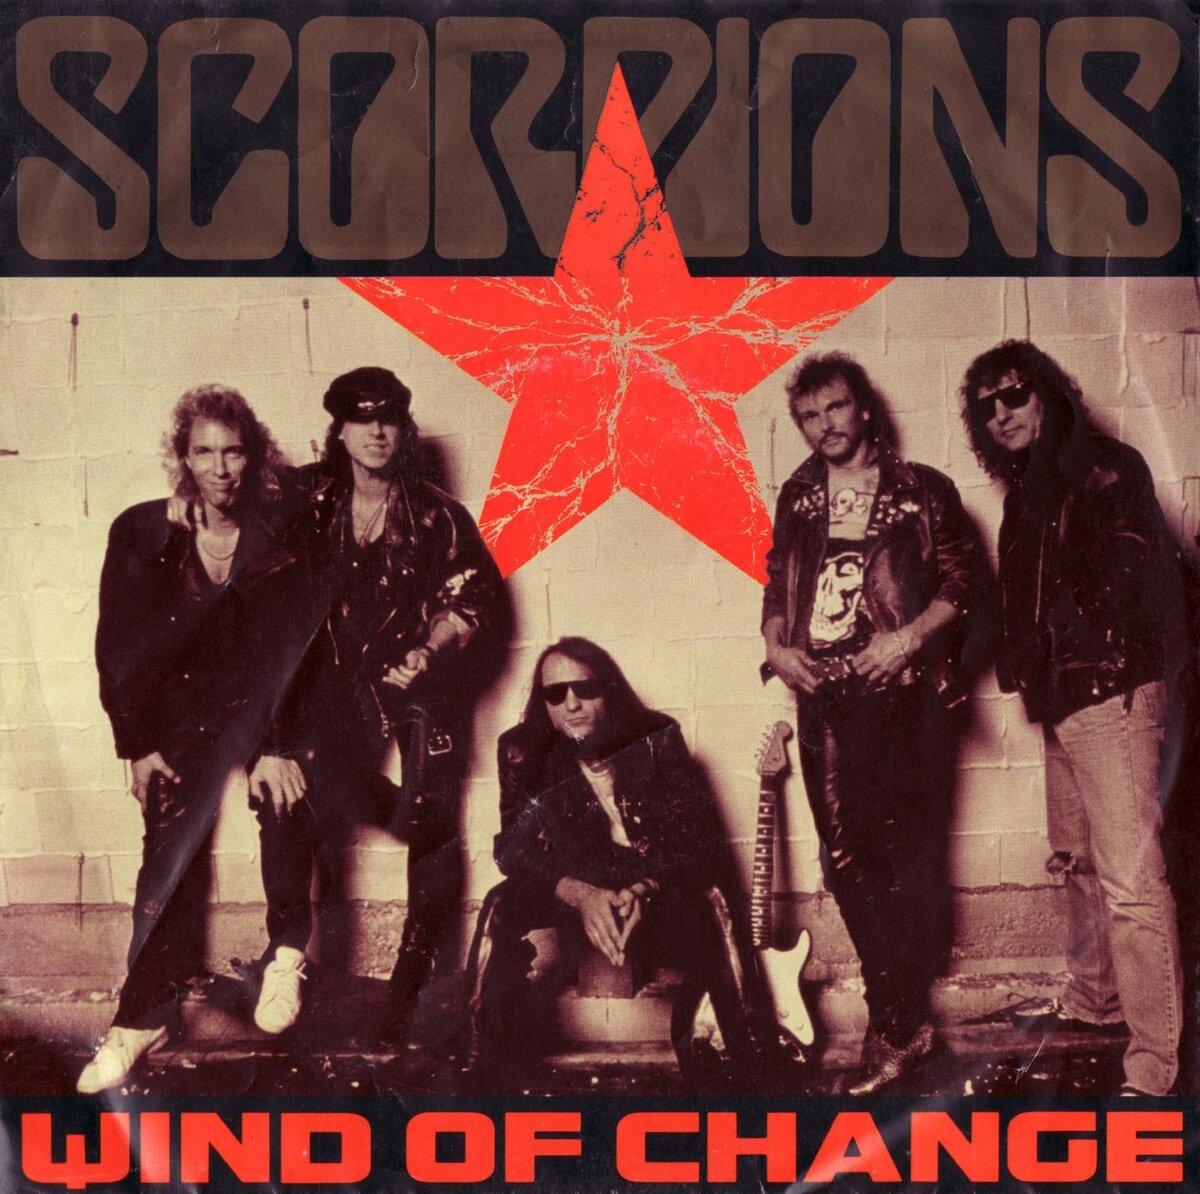 Scorpions Virgin Killer 1976 обложка. Scorpions 1975. Scorpions Wind of change обложка. Альбом Virgin Killer Scorpions. Песня скорпионс ветер перемен